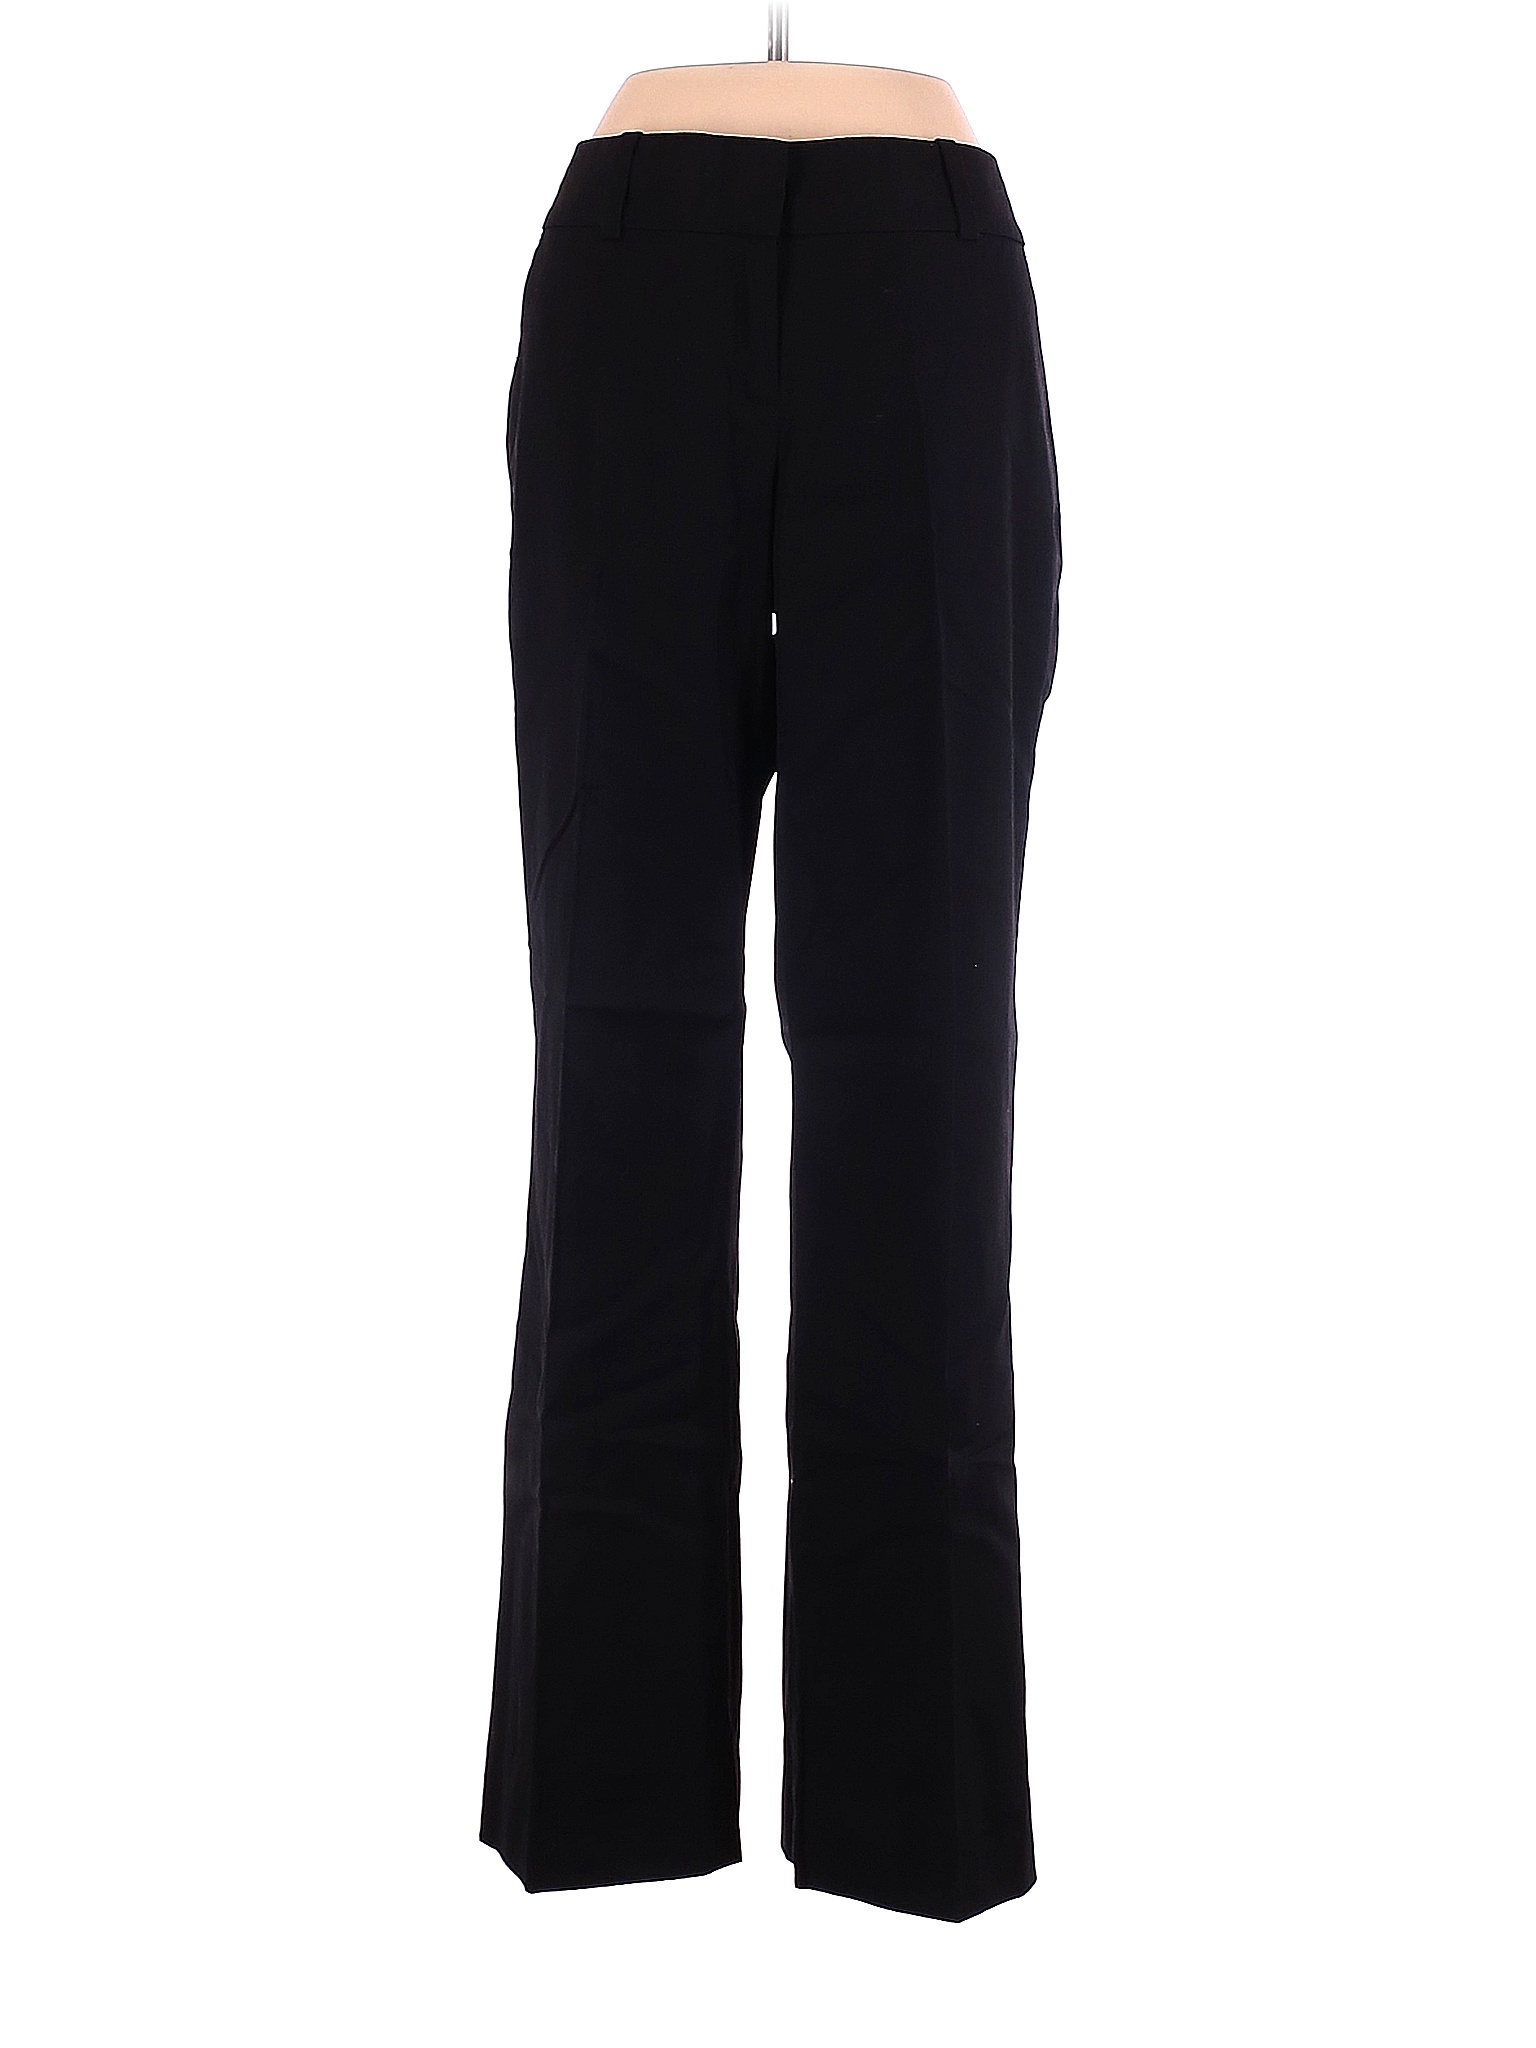 Ann Taylor Solid Black Wool Pants Size 2 (Petite) - 93% off | thredUP